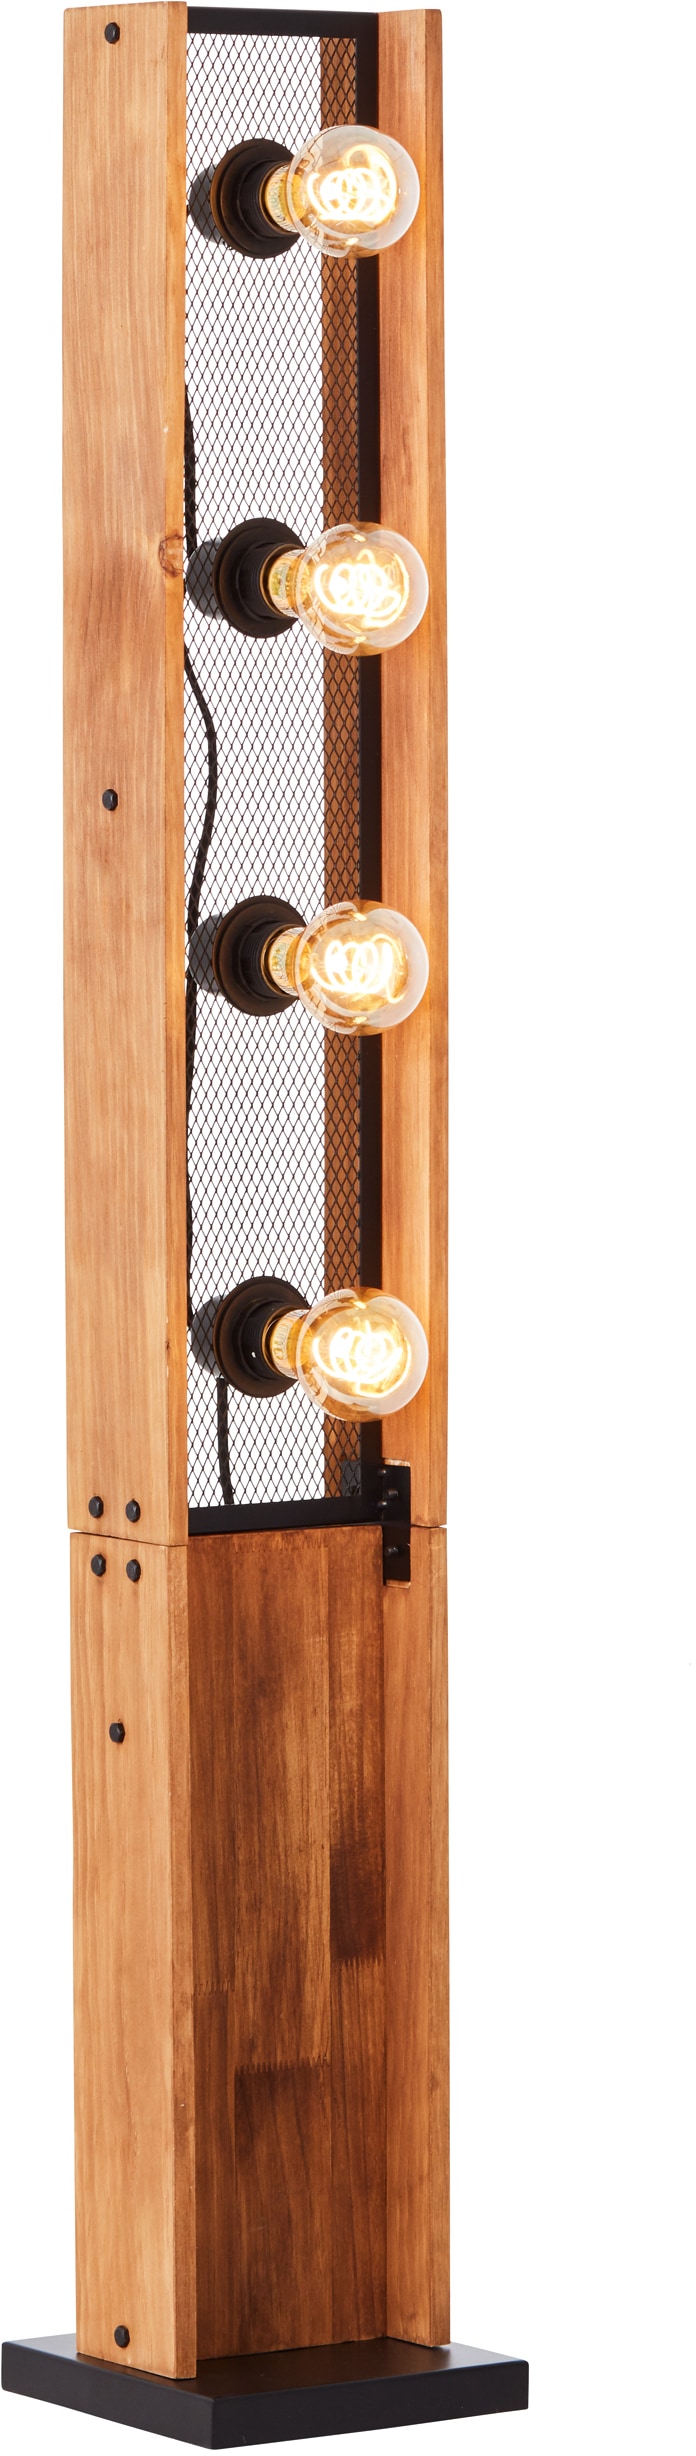 Brilliant Leuchten Stehlampe 4 20 125,5 Online flammig-flammig, 4 20 Metall/Holz, schwarz/holz E27, x cm, »Calandra«, x x OTTO Shop im